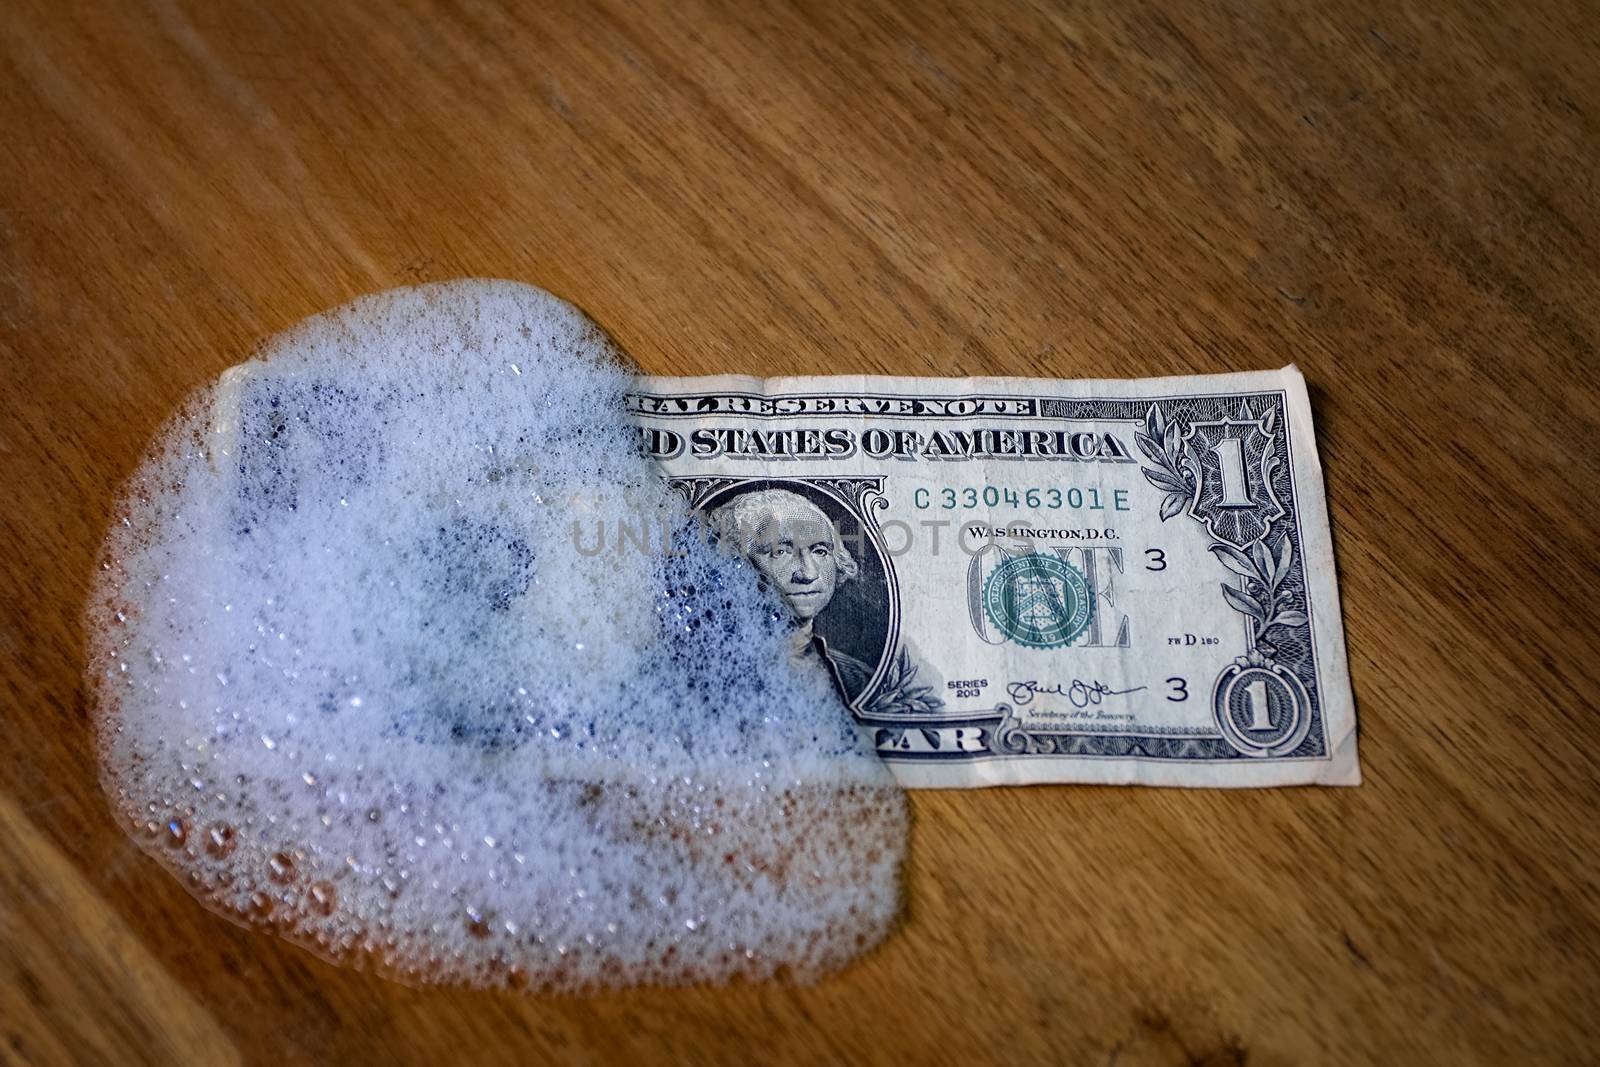 Foam on a dollar bill by jrivalta